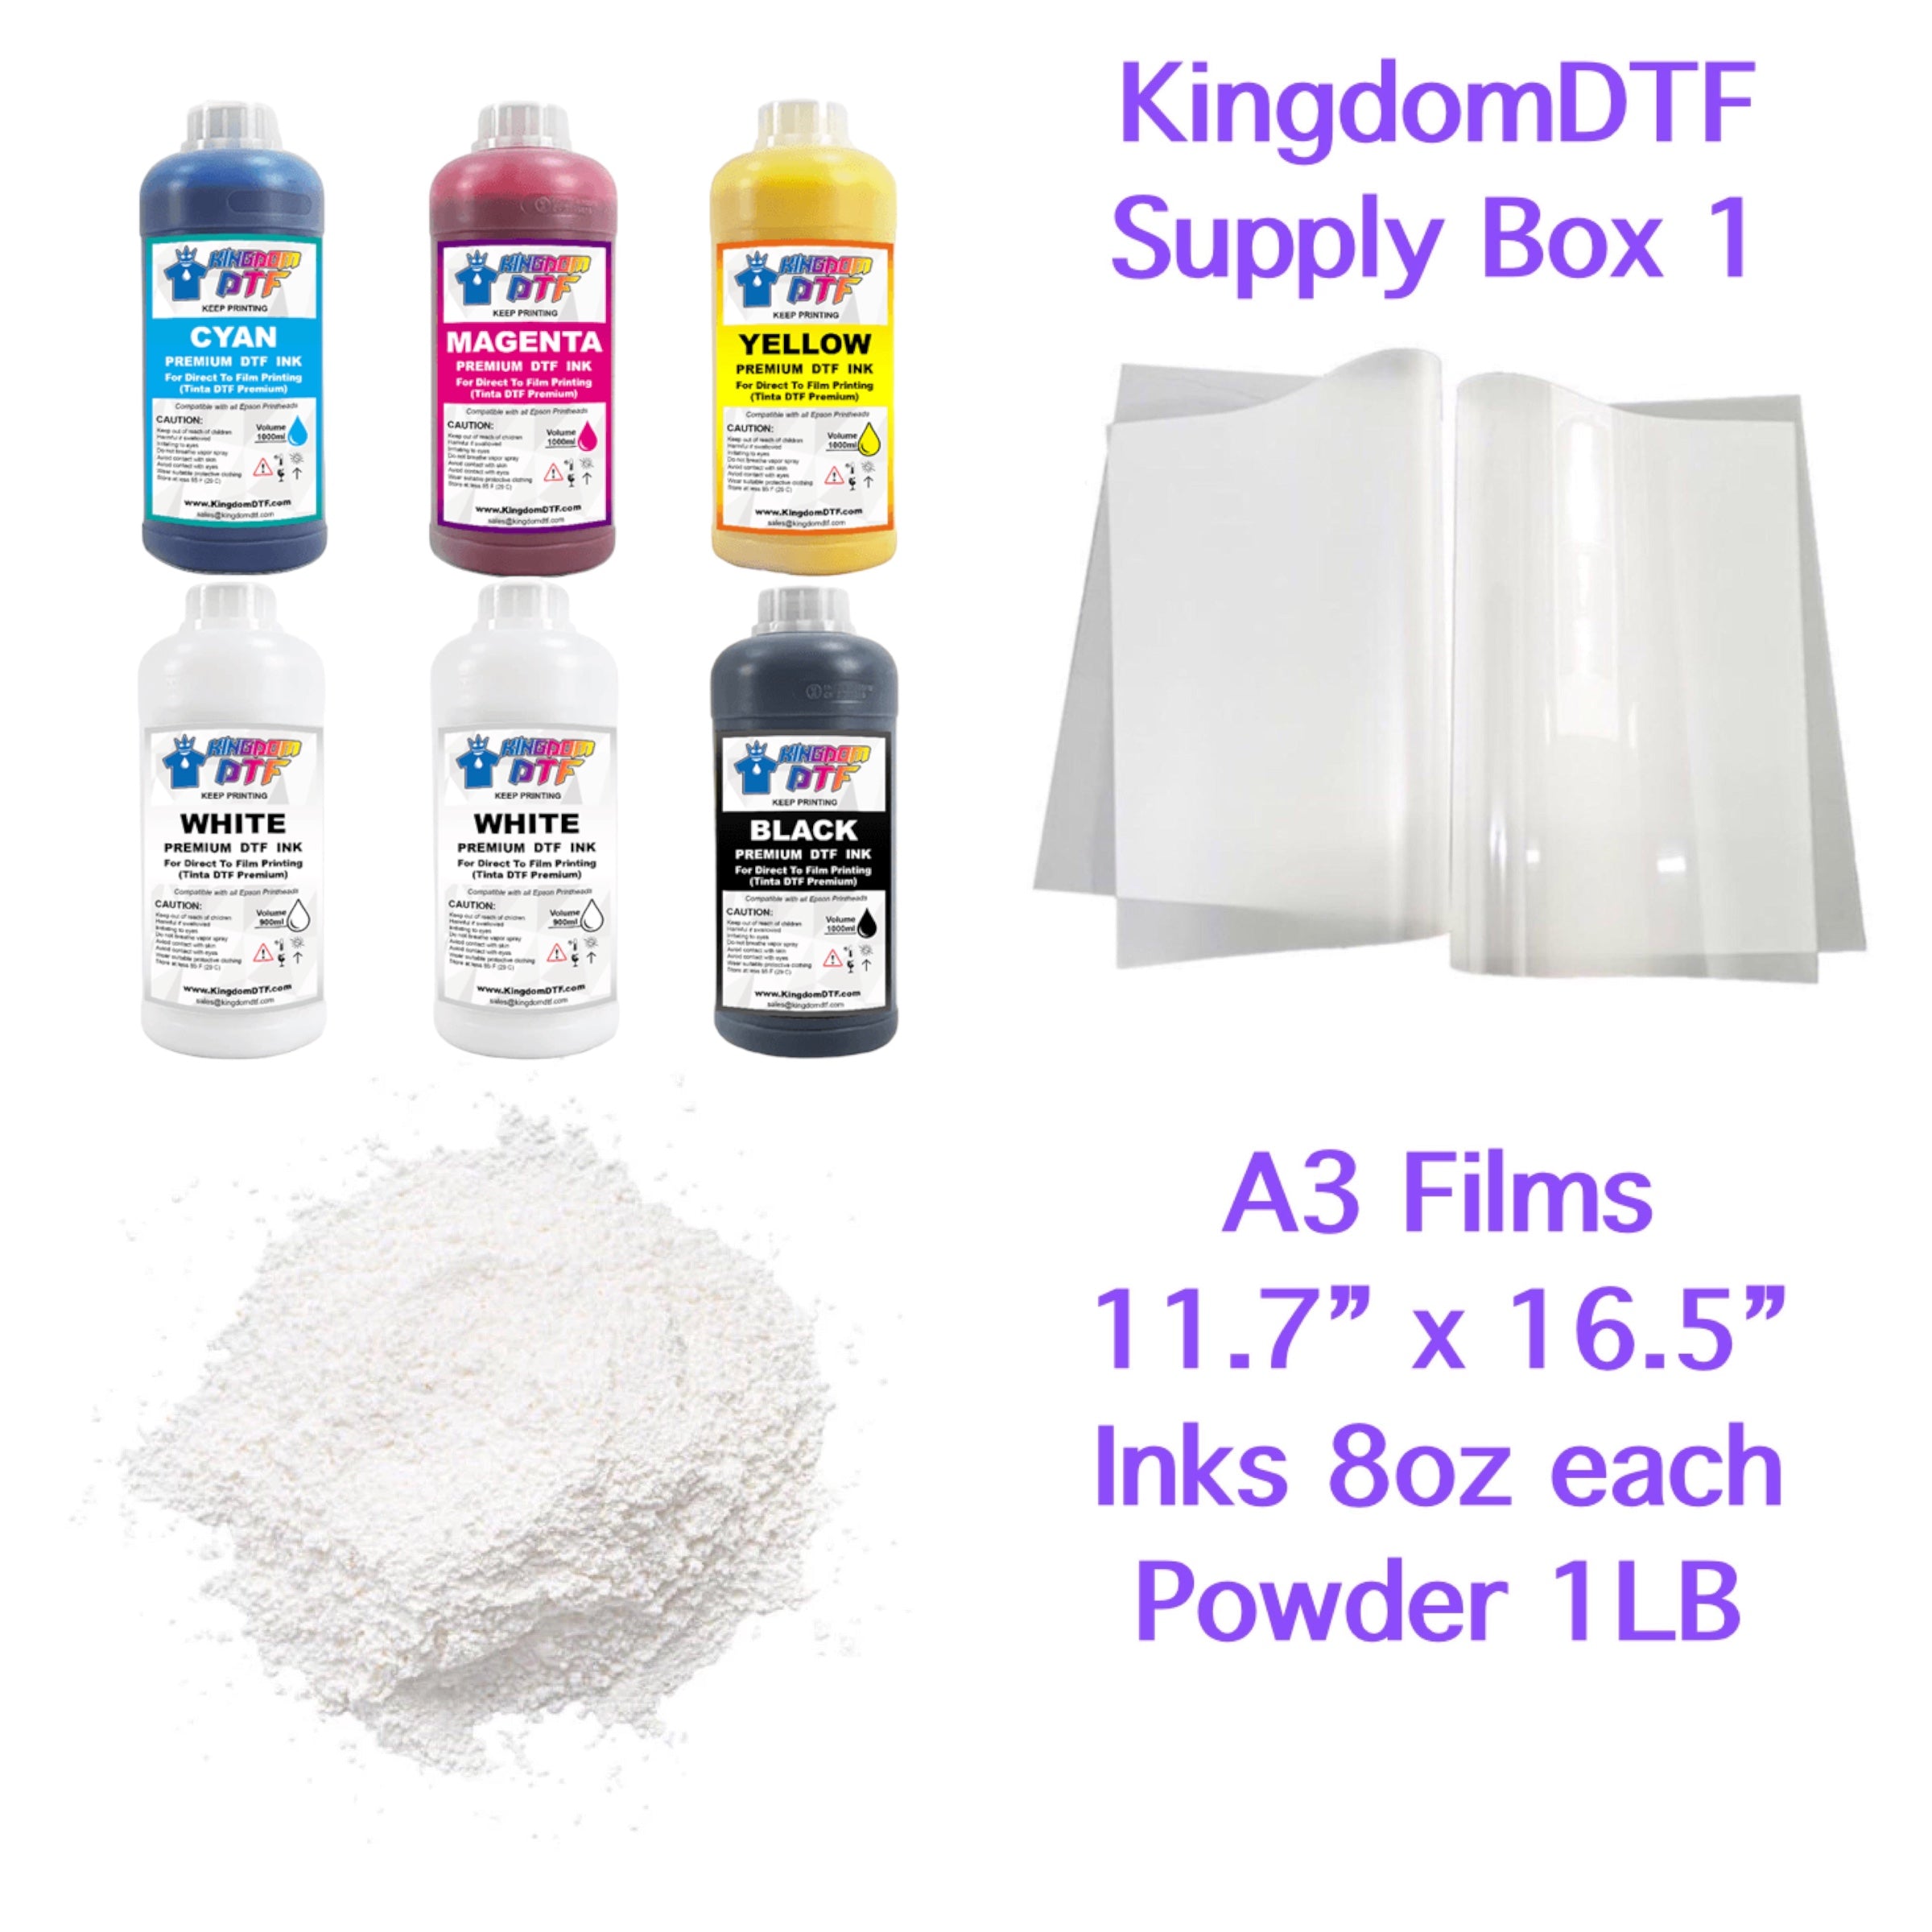 Kingdom DTF Supply Box 1 - DTF Inks, DTF Films, DTF Powder